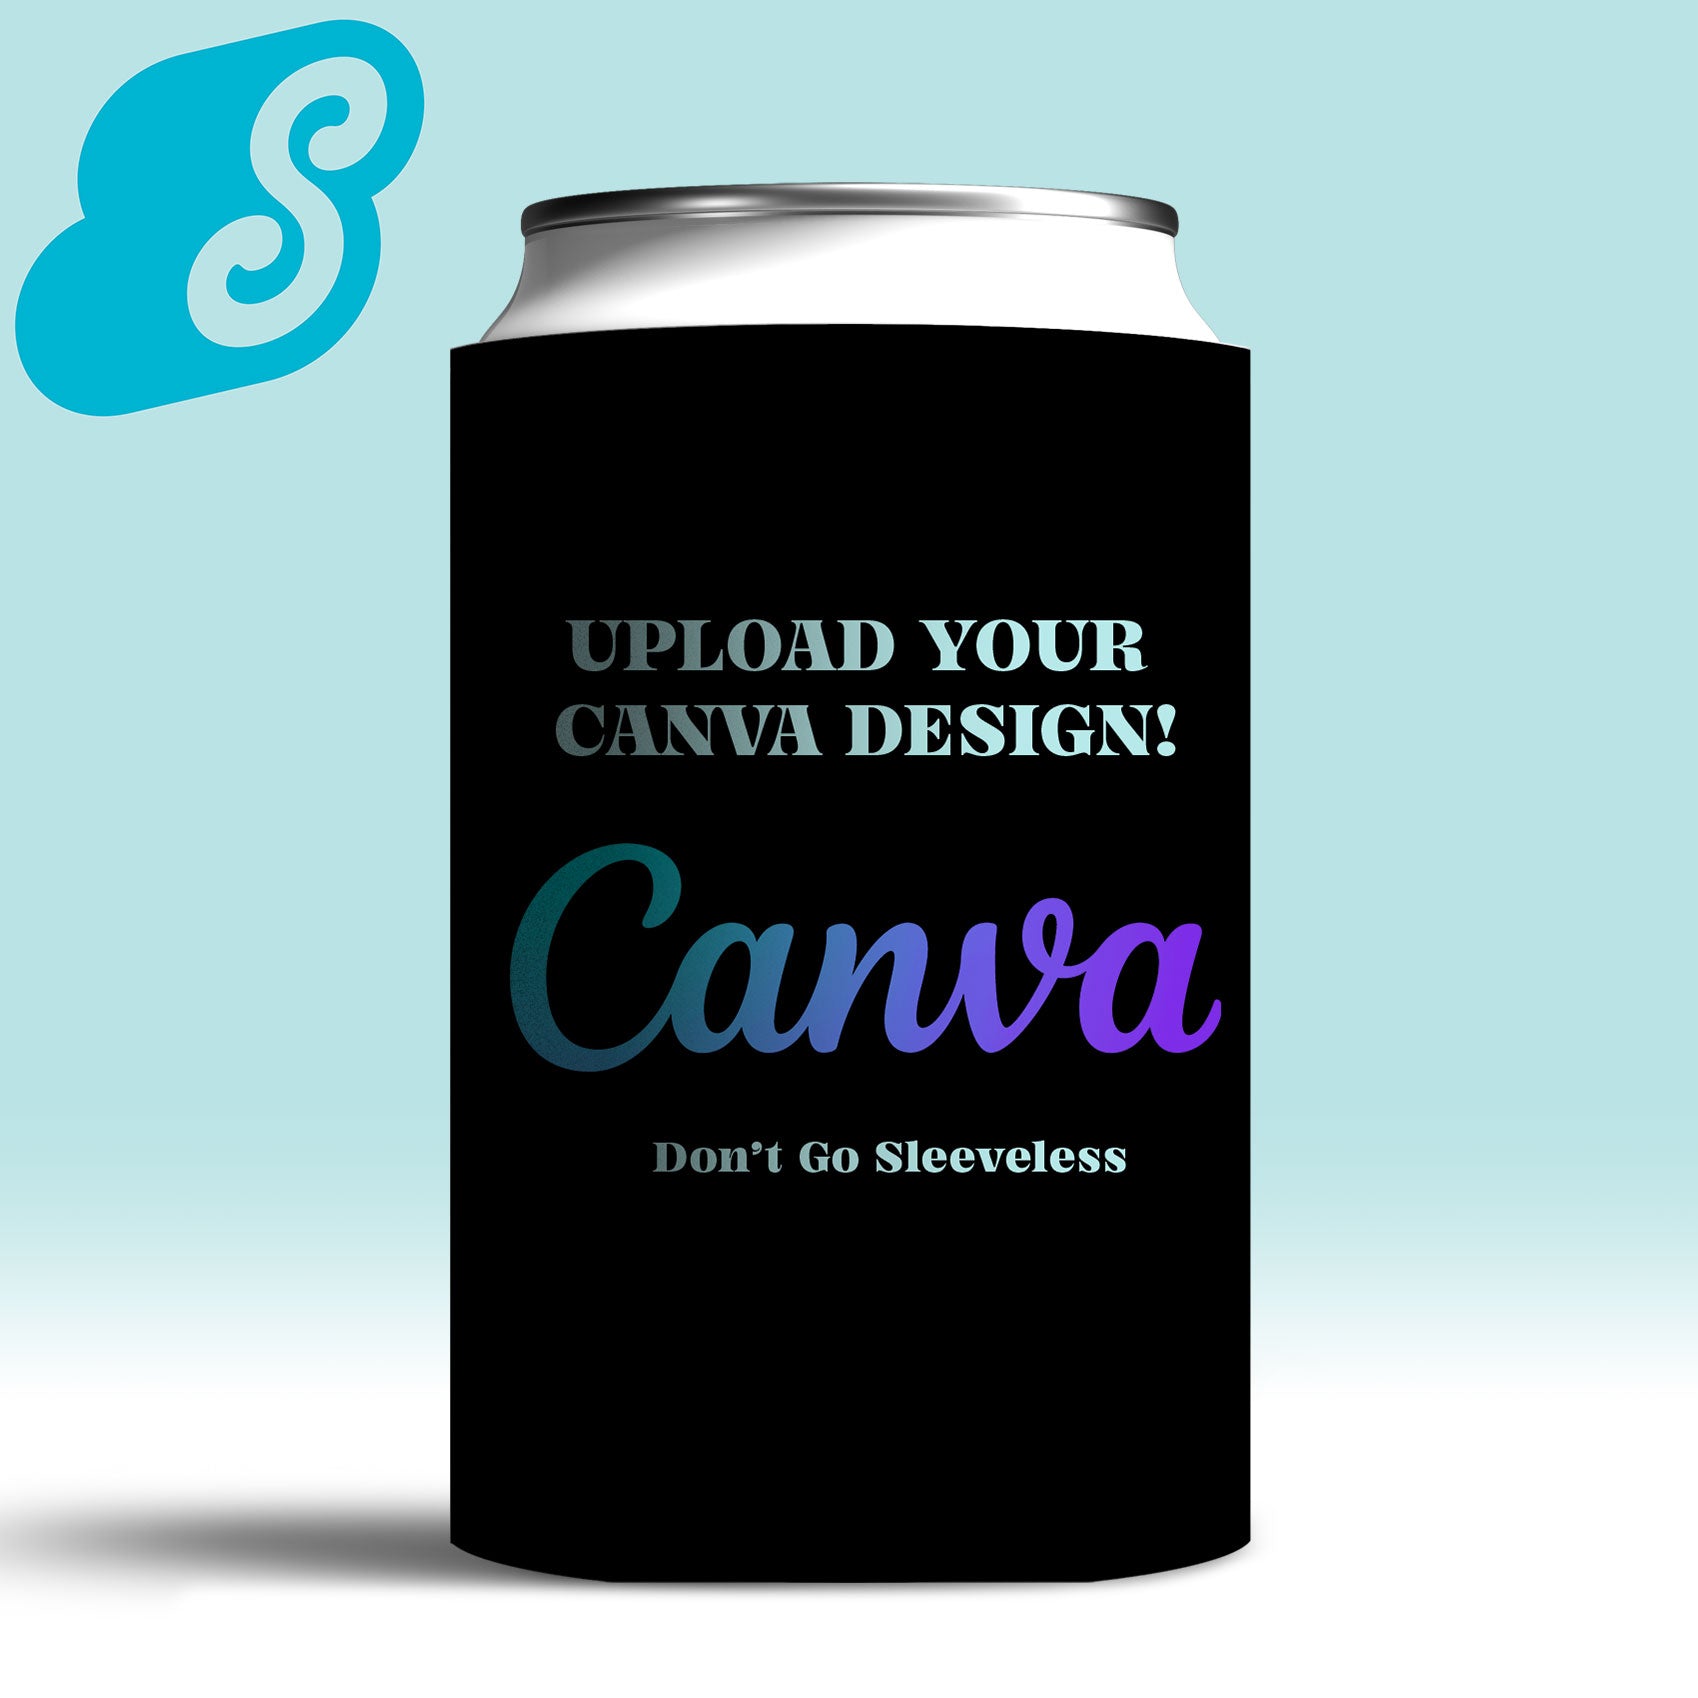 Upload Your Canva Design! 20 Sleeve Pack